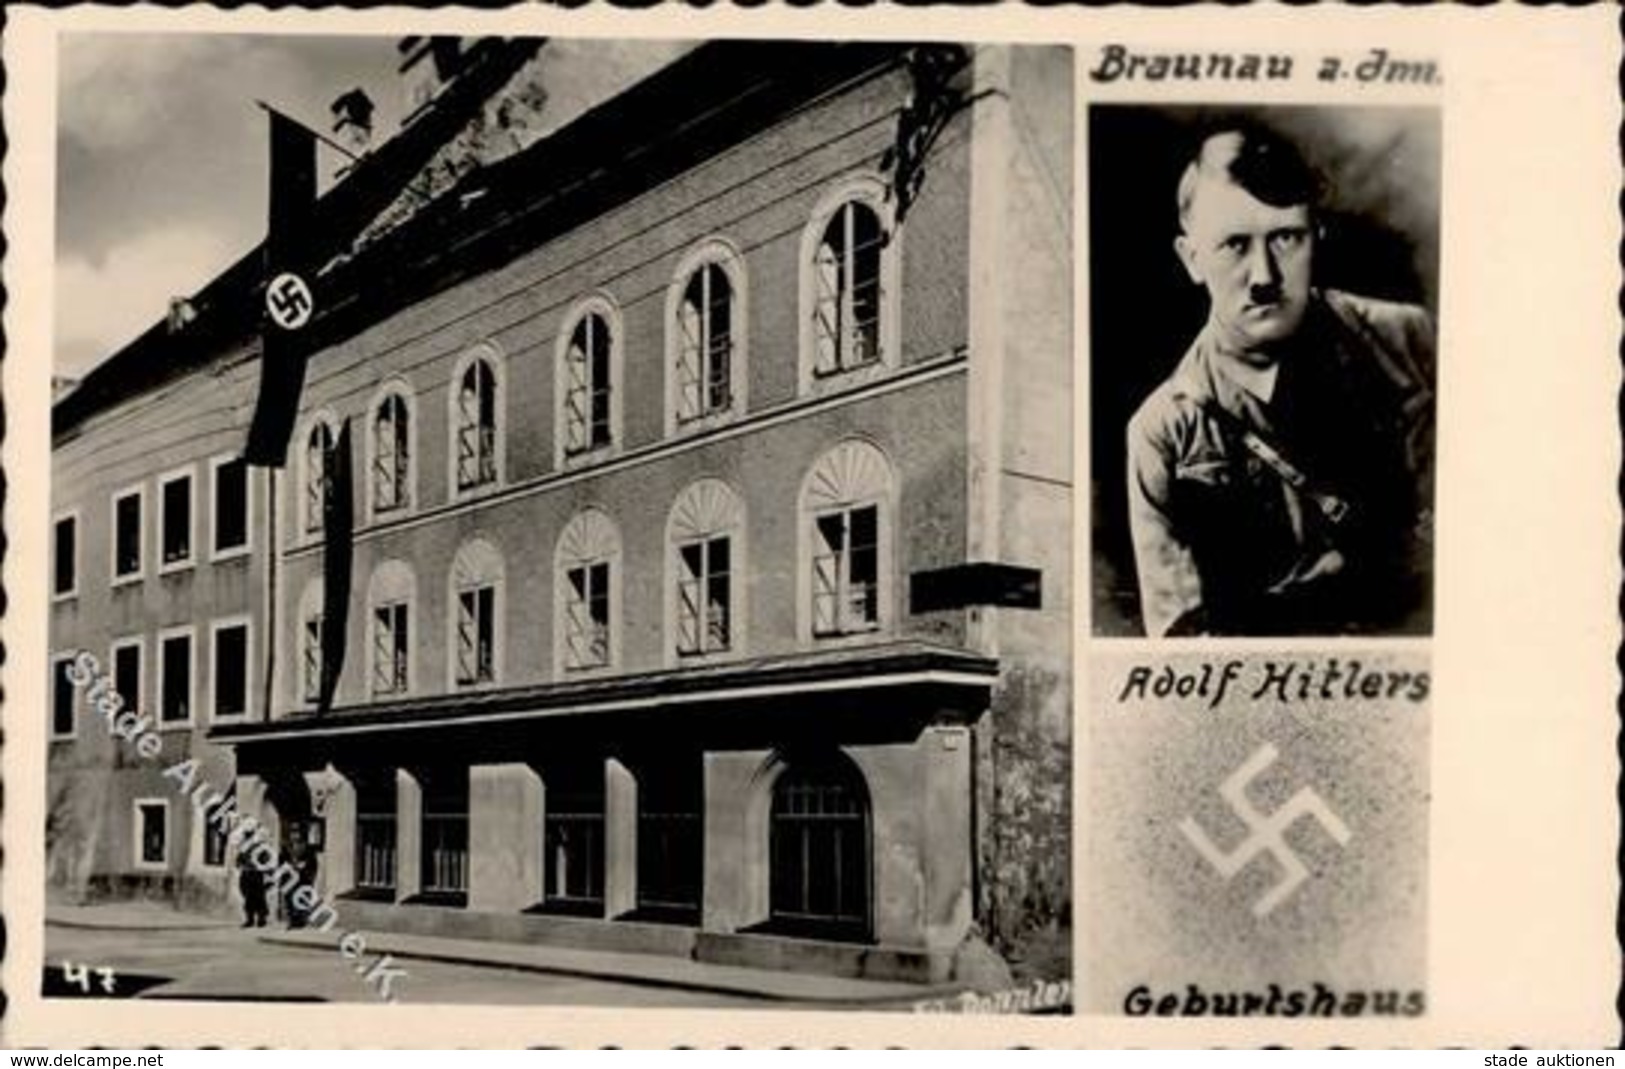 Hitler Geburtshaus WK II  Foto AK I-II - Guerre 1939-45